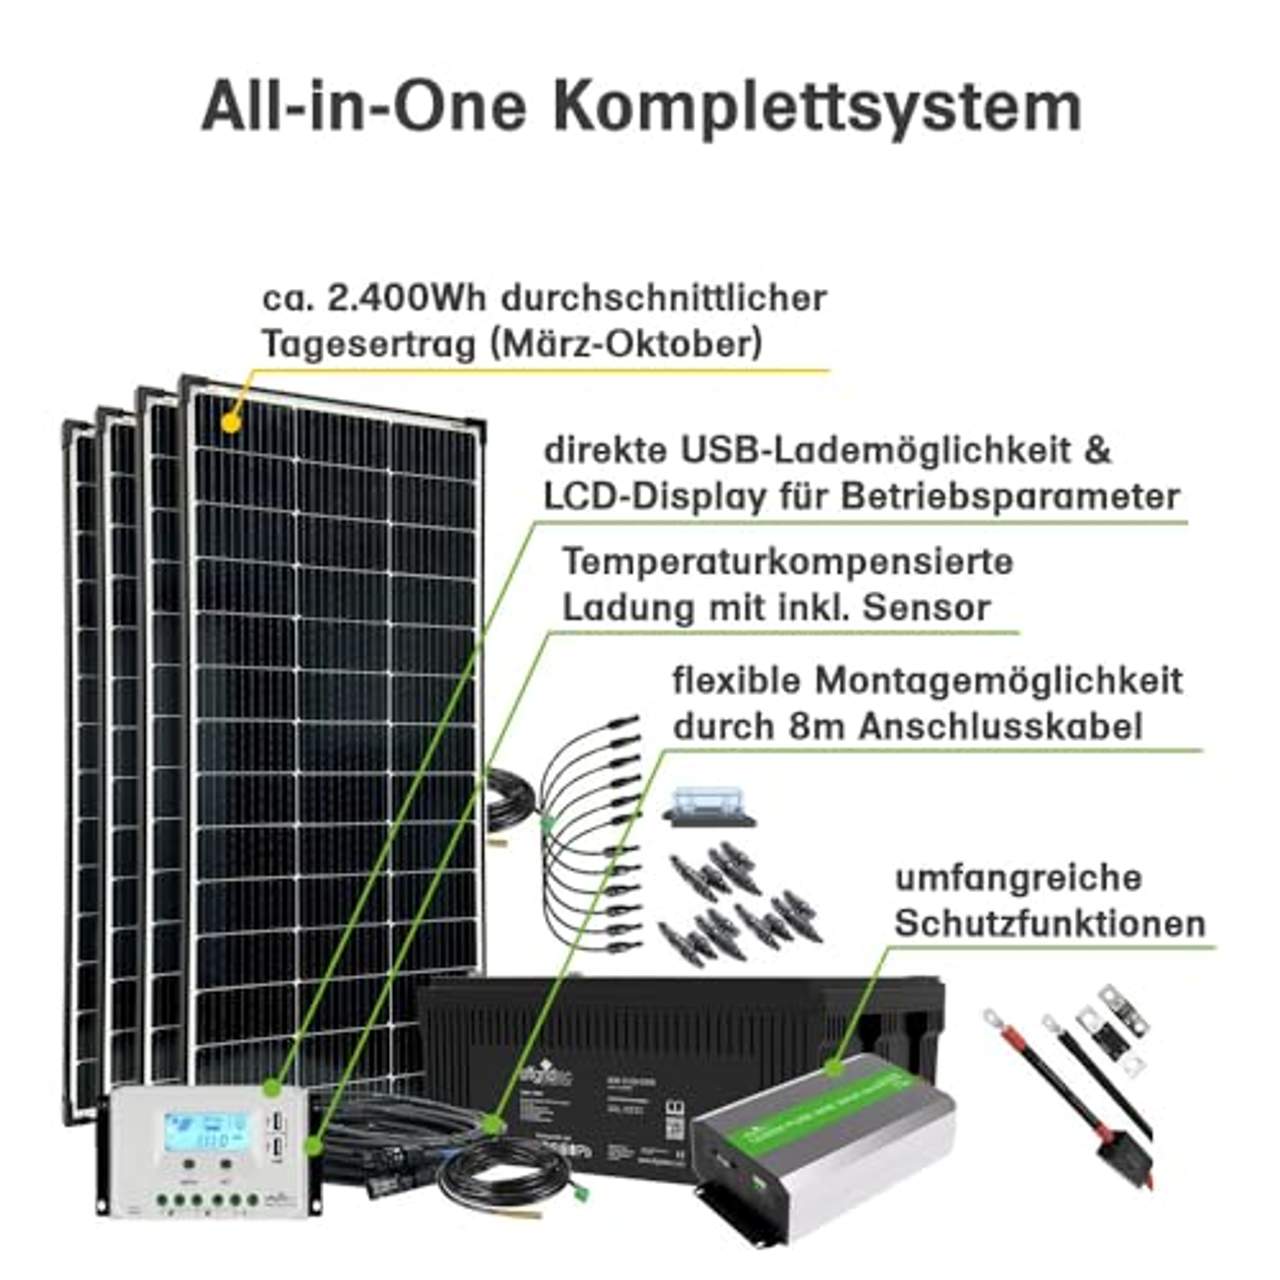 Offgridtec© Autark XXL-Master 600W Solar